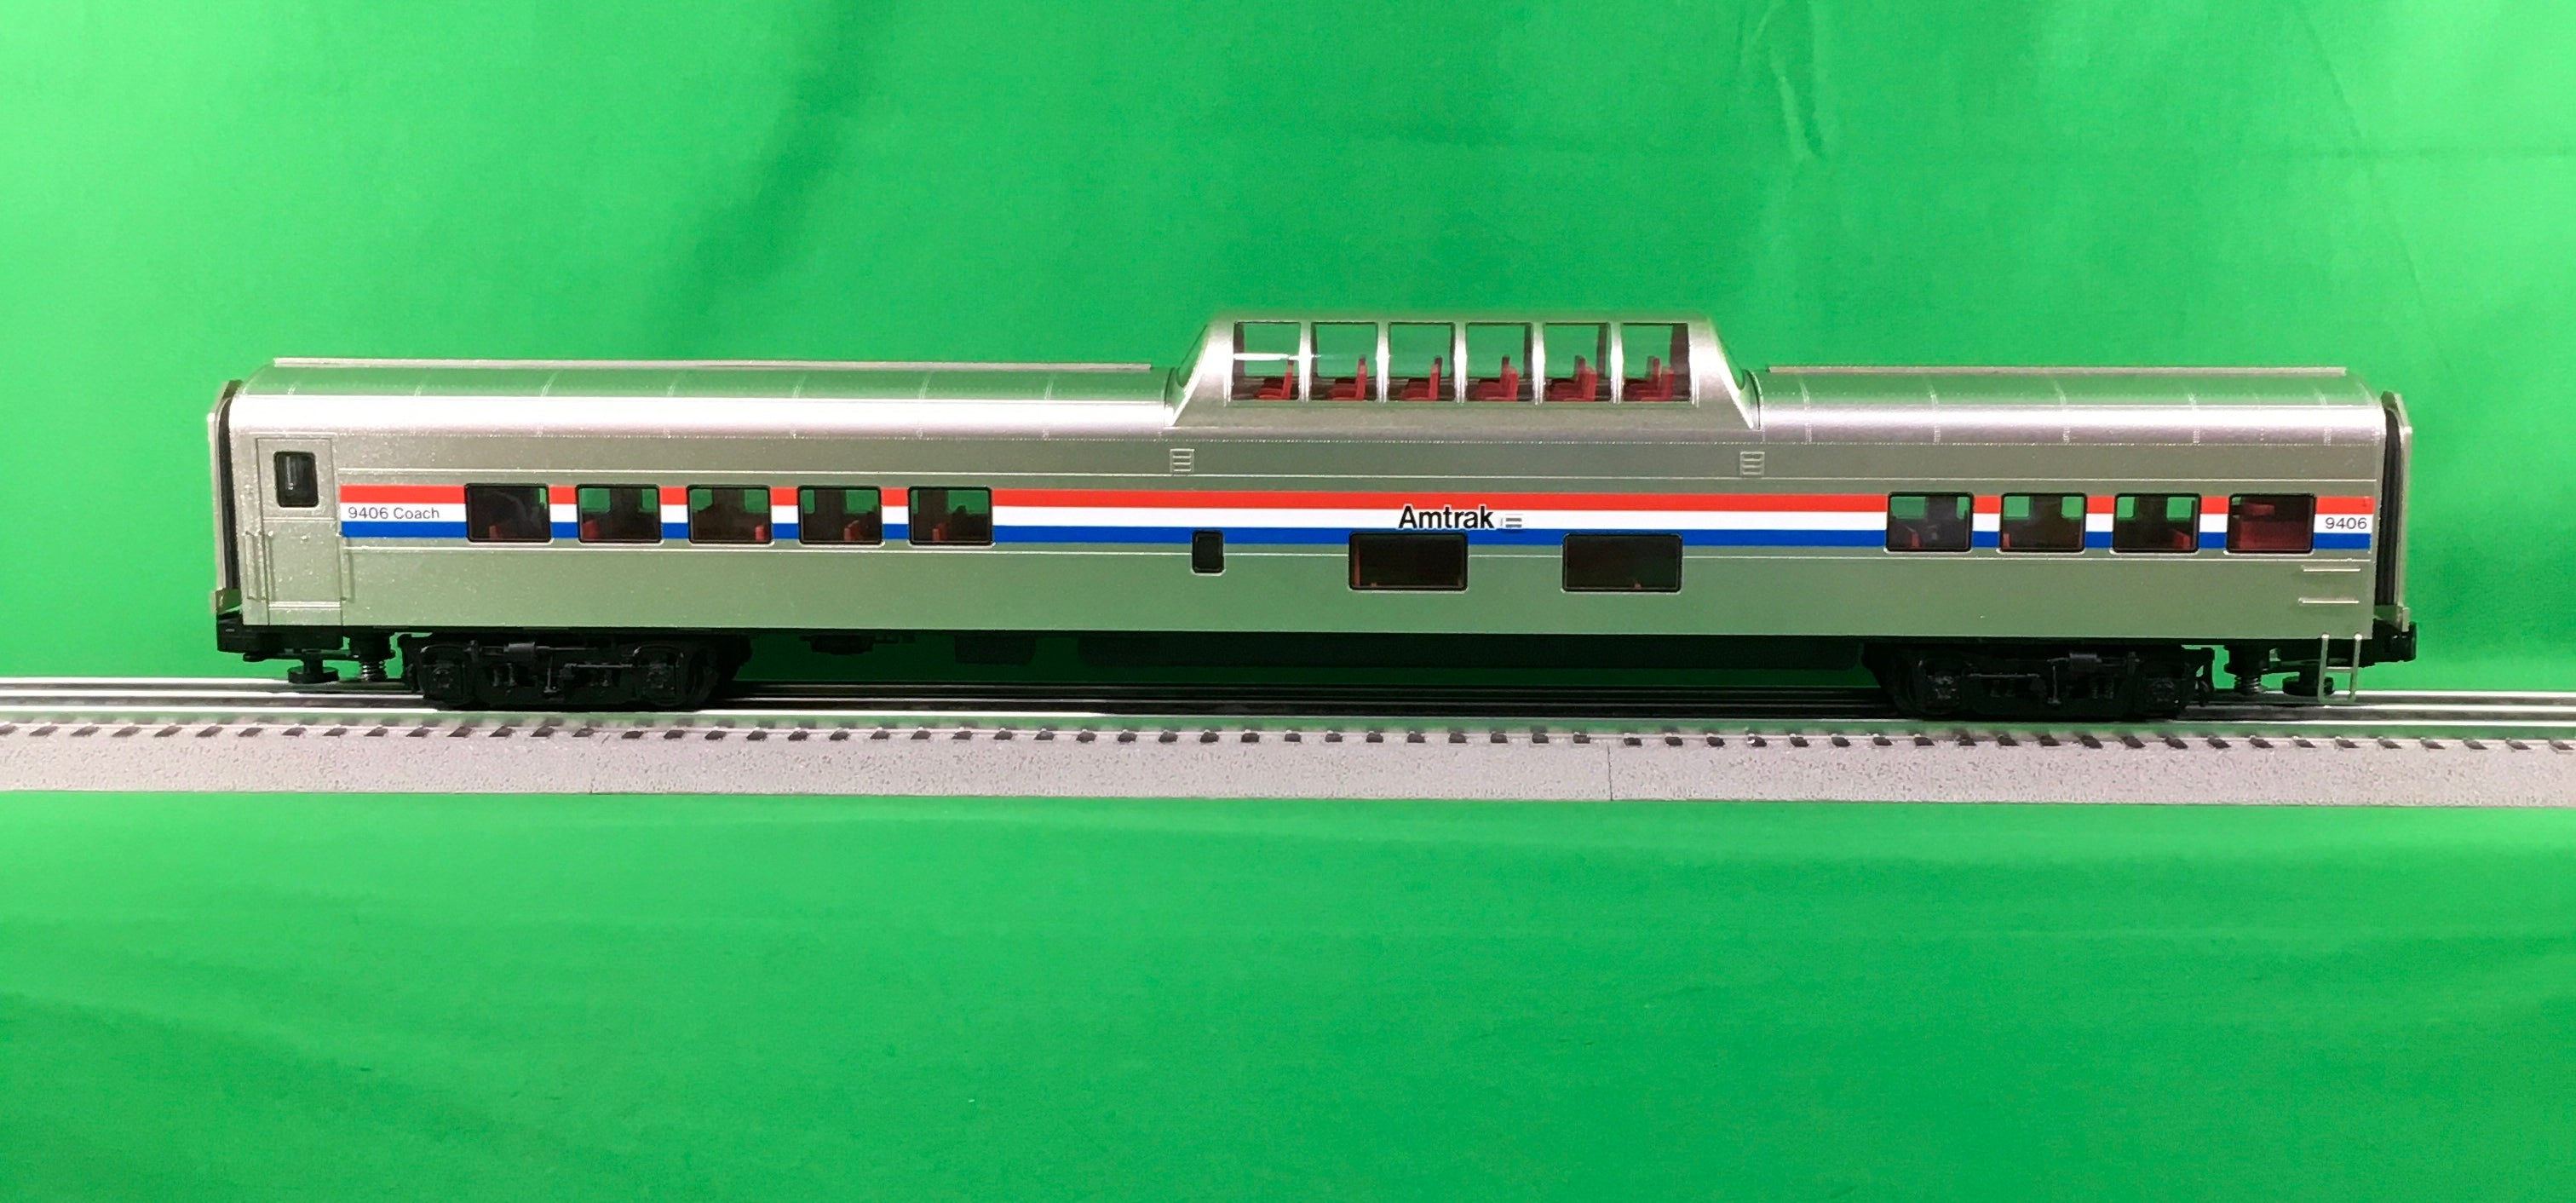 Lionel 2227260 - 21" Passenger Car Set "Amtrak" Phase III (4-Car)